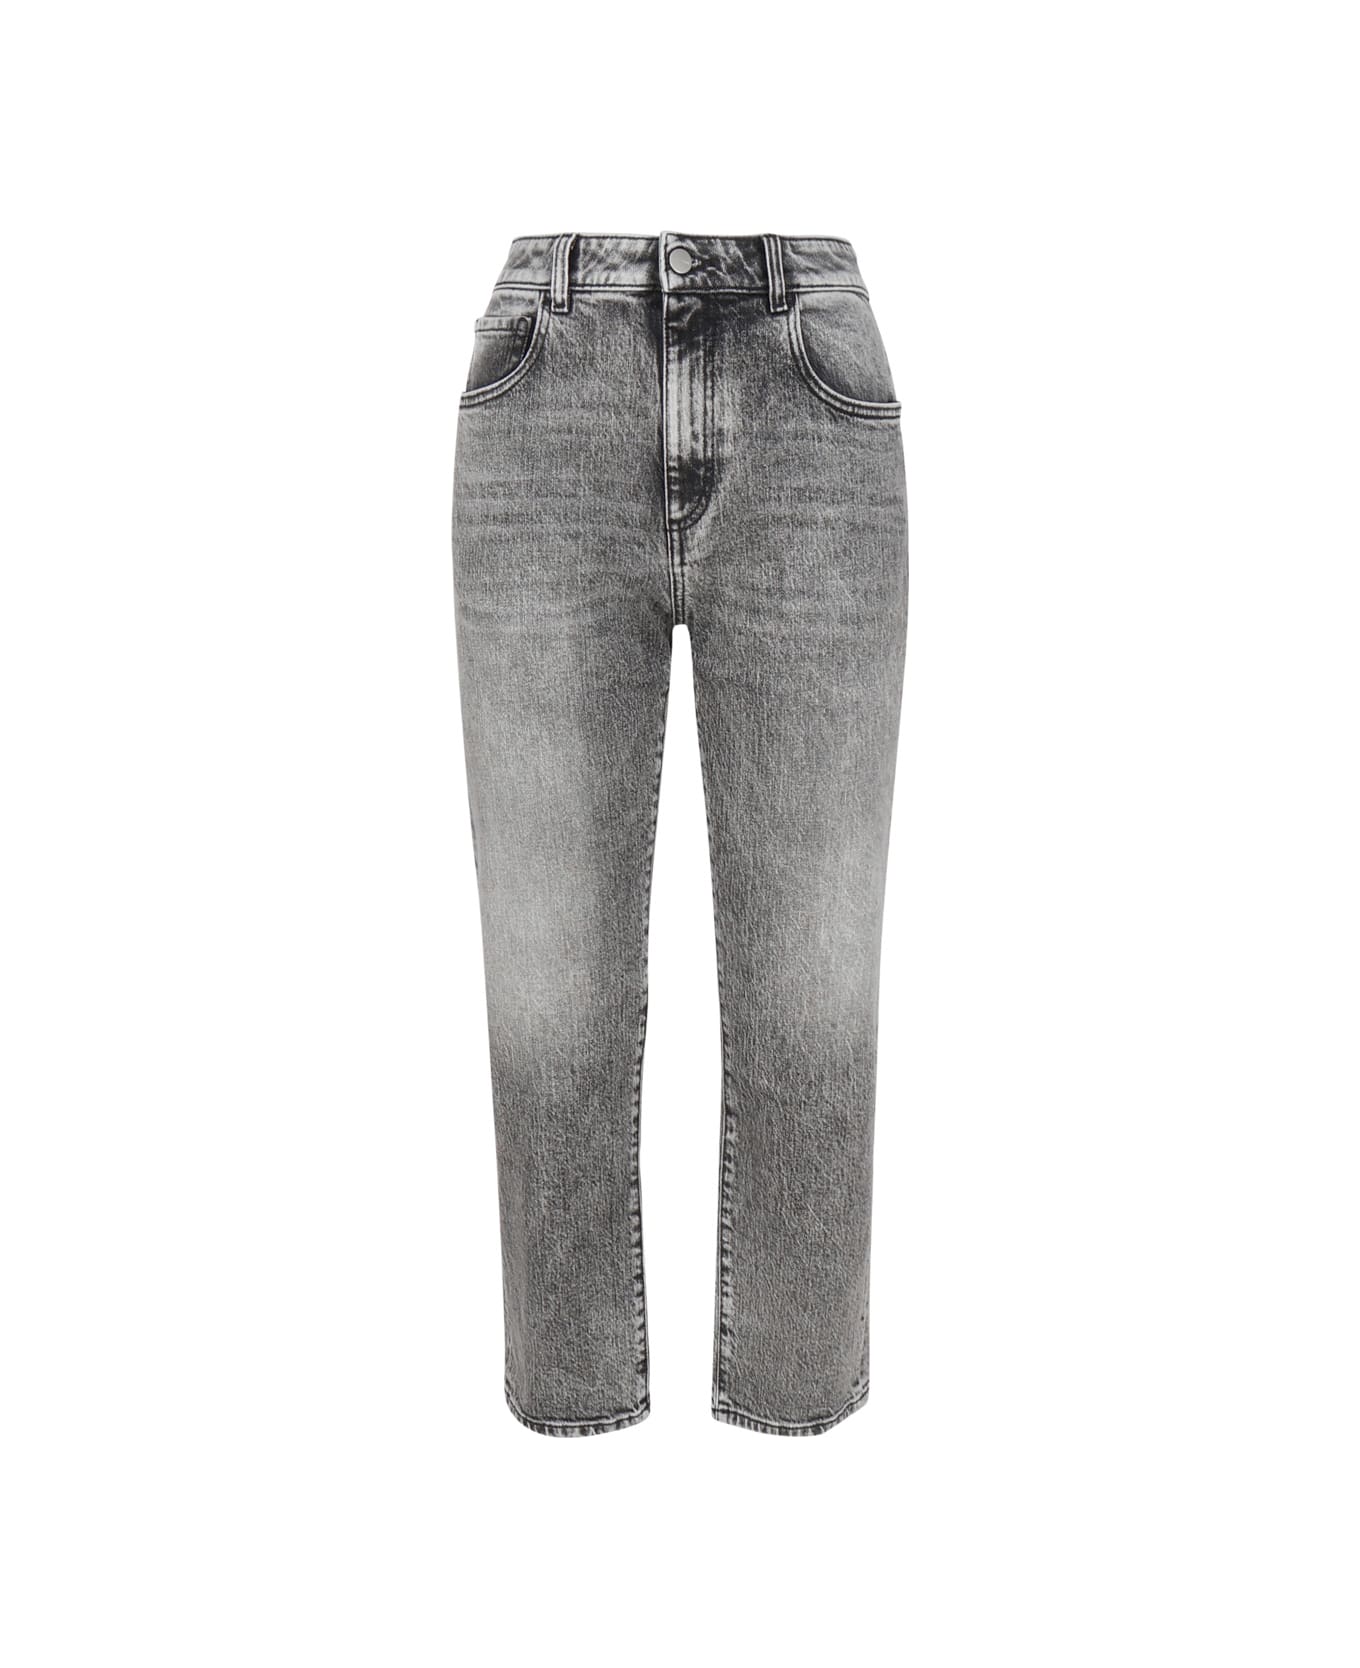 Icon Denim Vintage Effect Jeans - Grey デニム